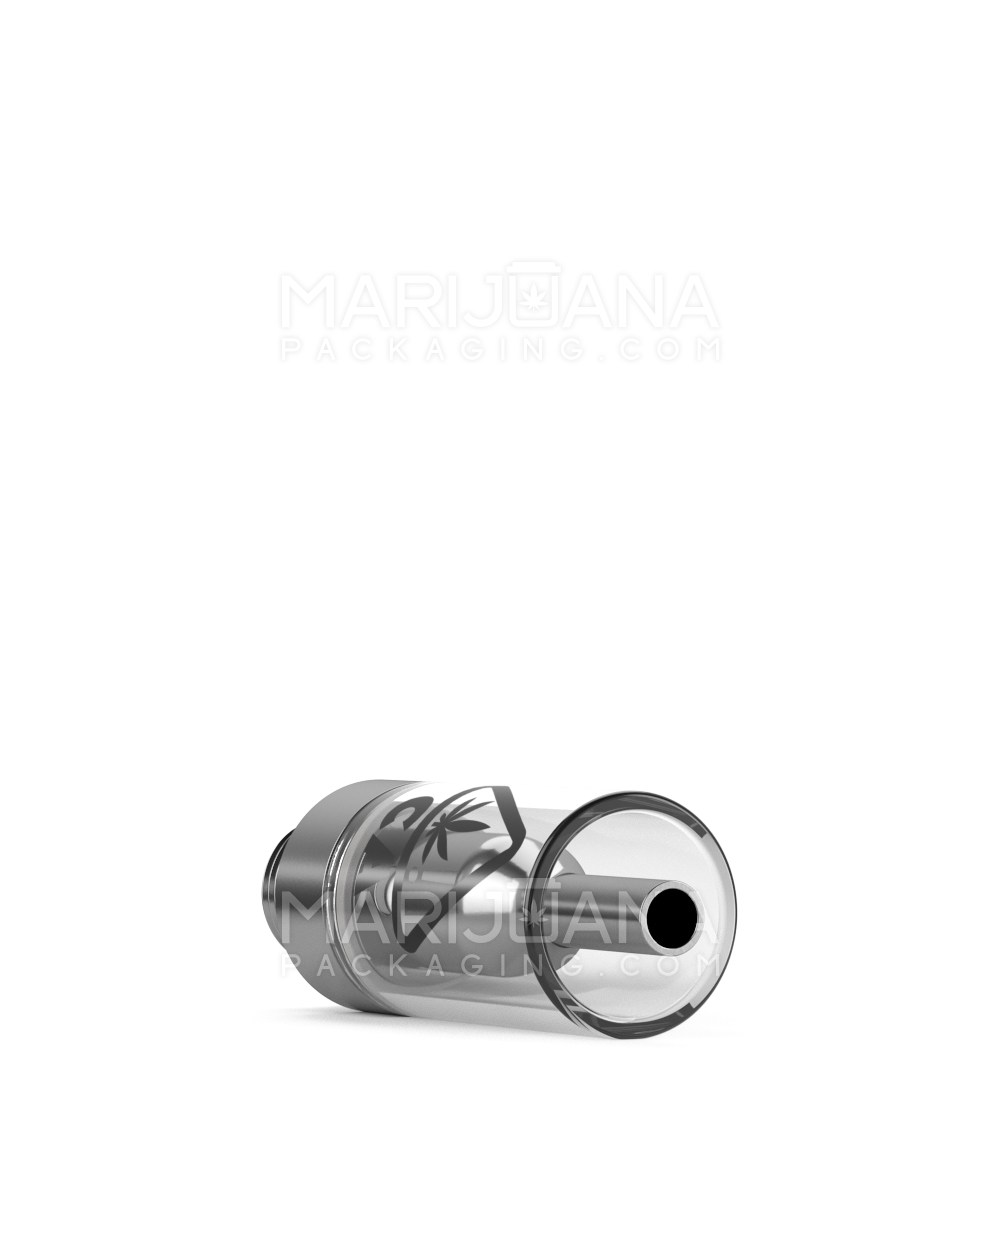 RAE California Universal Symbol | Ceramic Core Glass Vape Cartridge w/ 2mm Aperture | 0.5mL - Arbor Press - 100 Count - 5